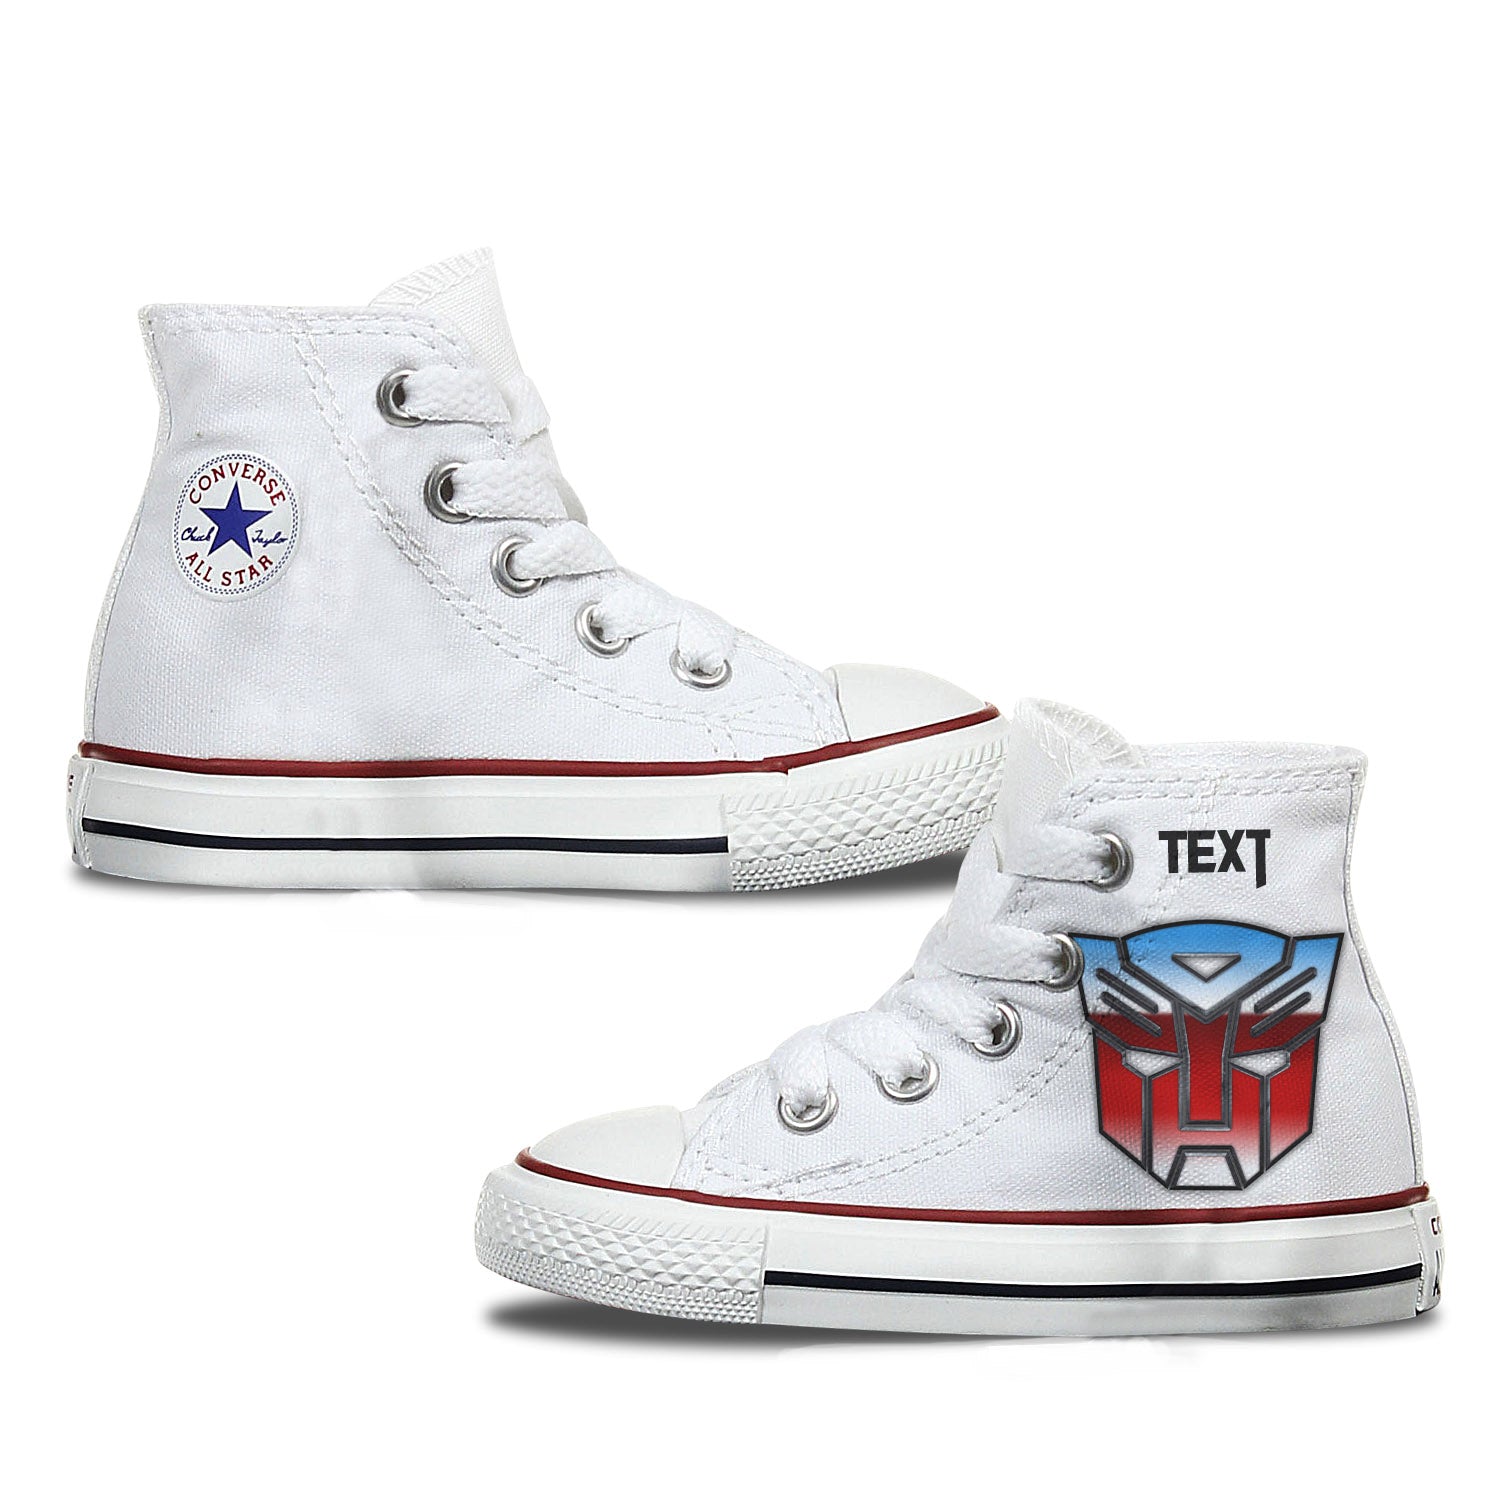 Transformers Custom Converse - Bump Shoes